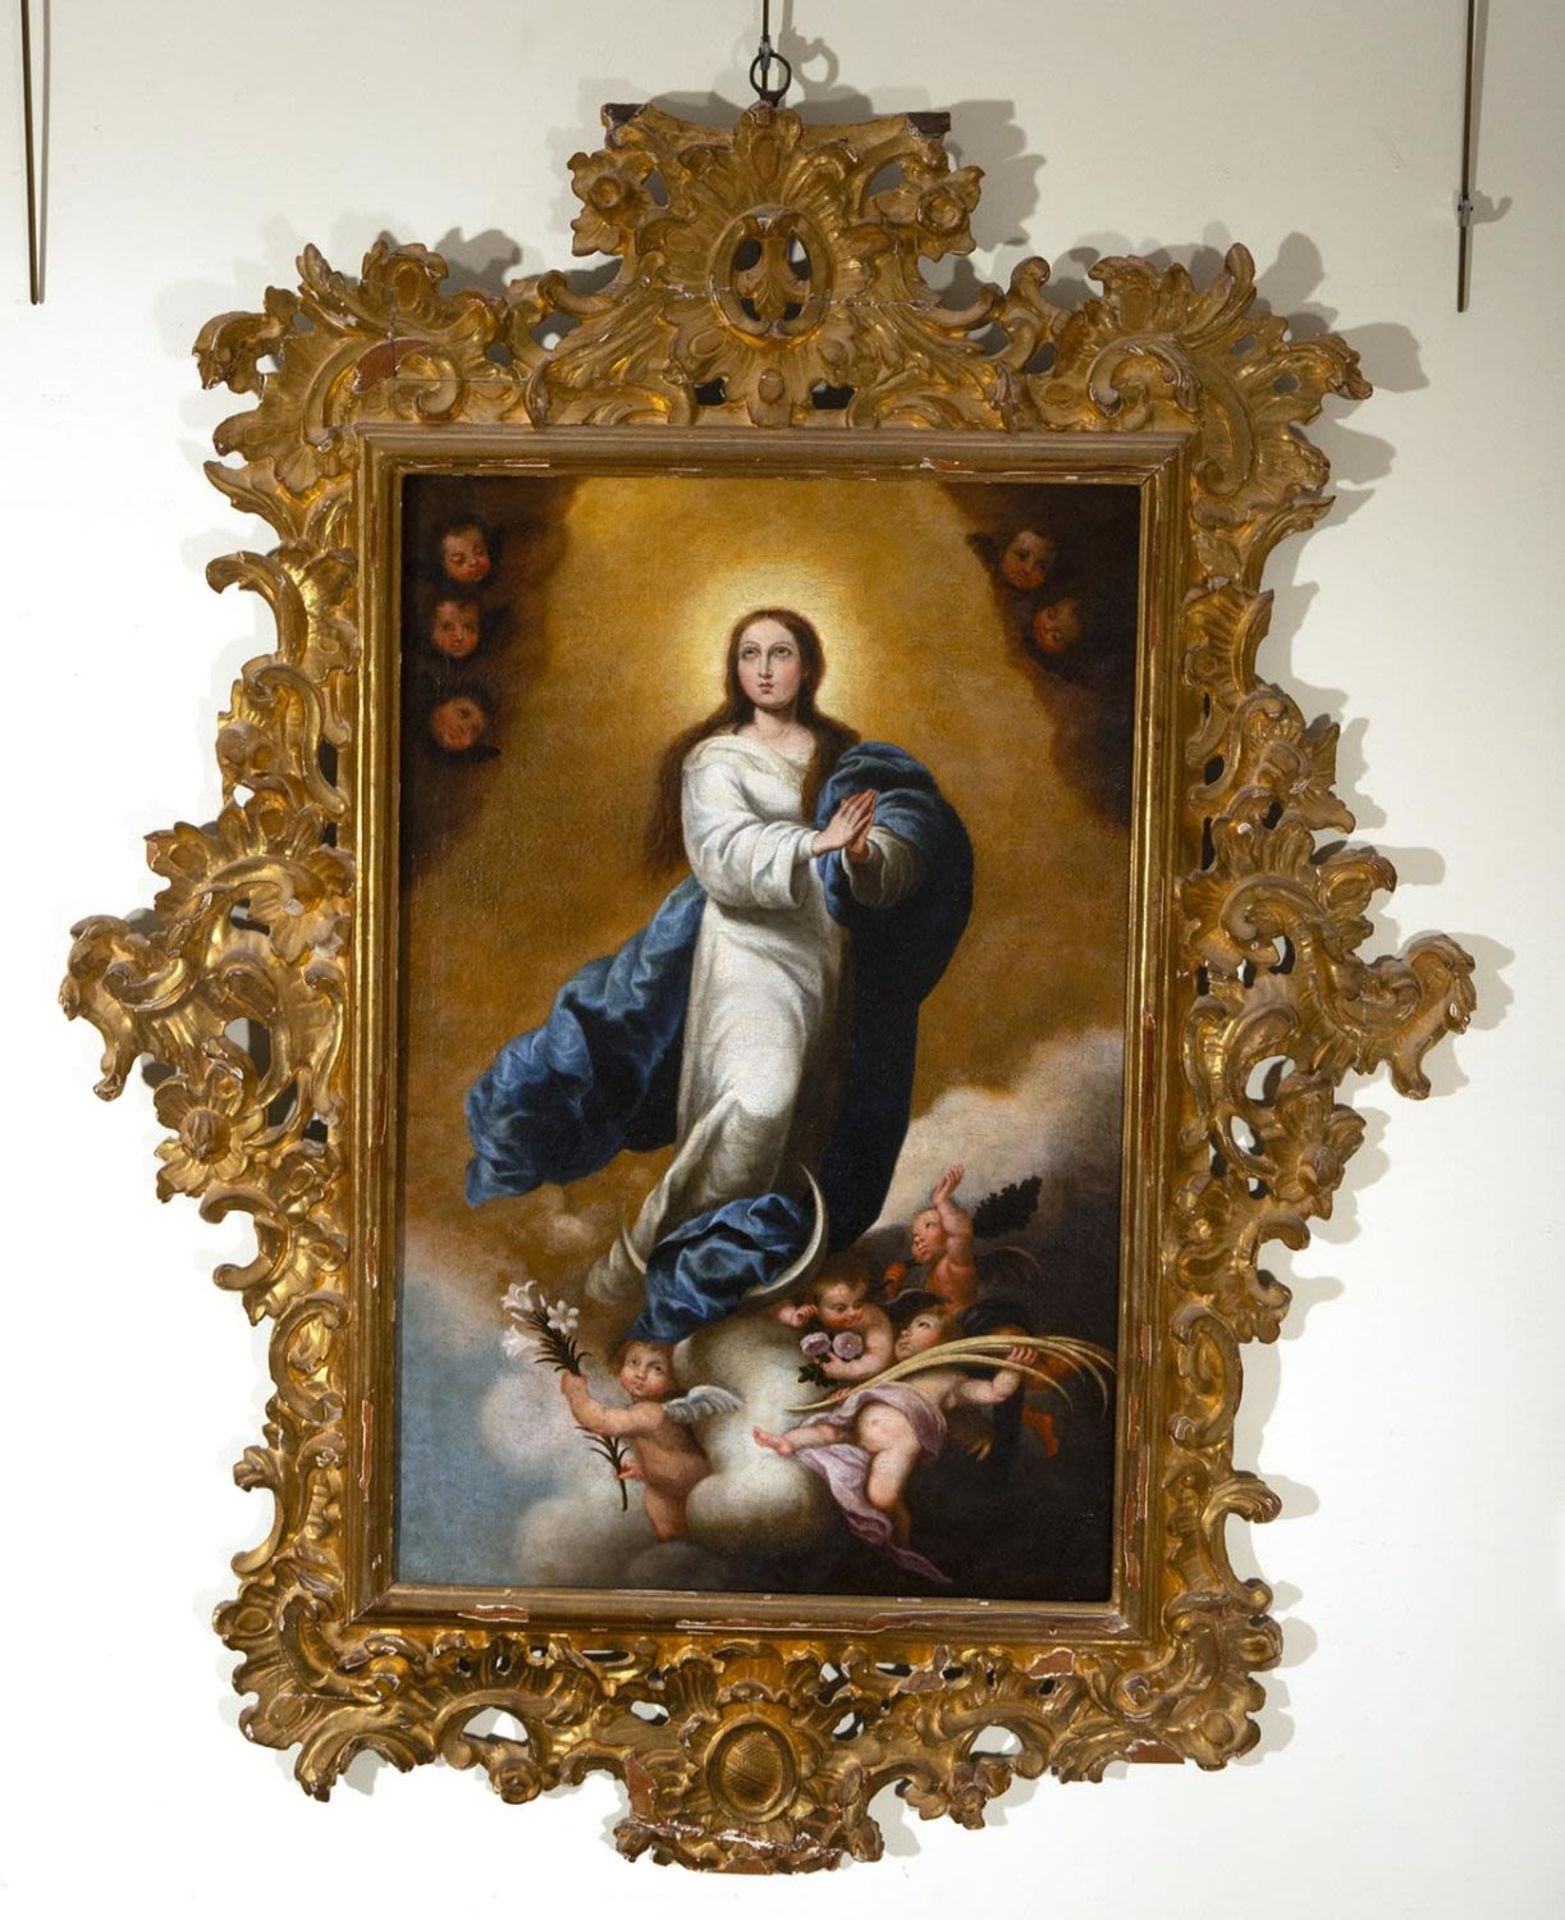 Virgin in Glory, circle of Bartolomé Esteban Murillo, 18th century Sevillian school